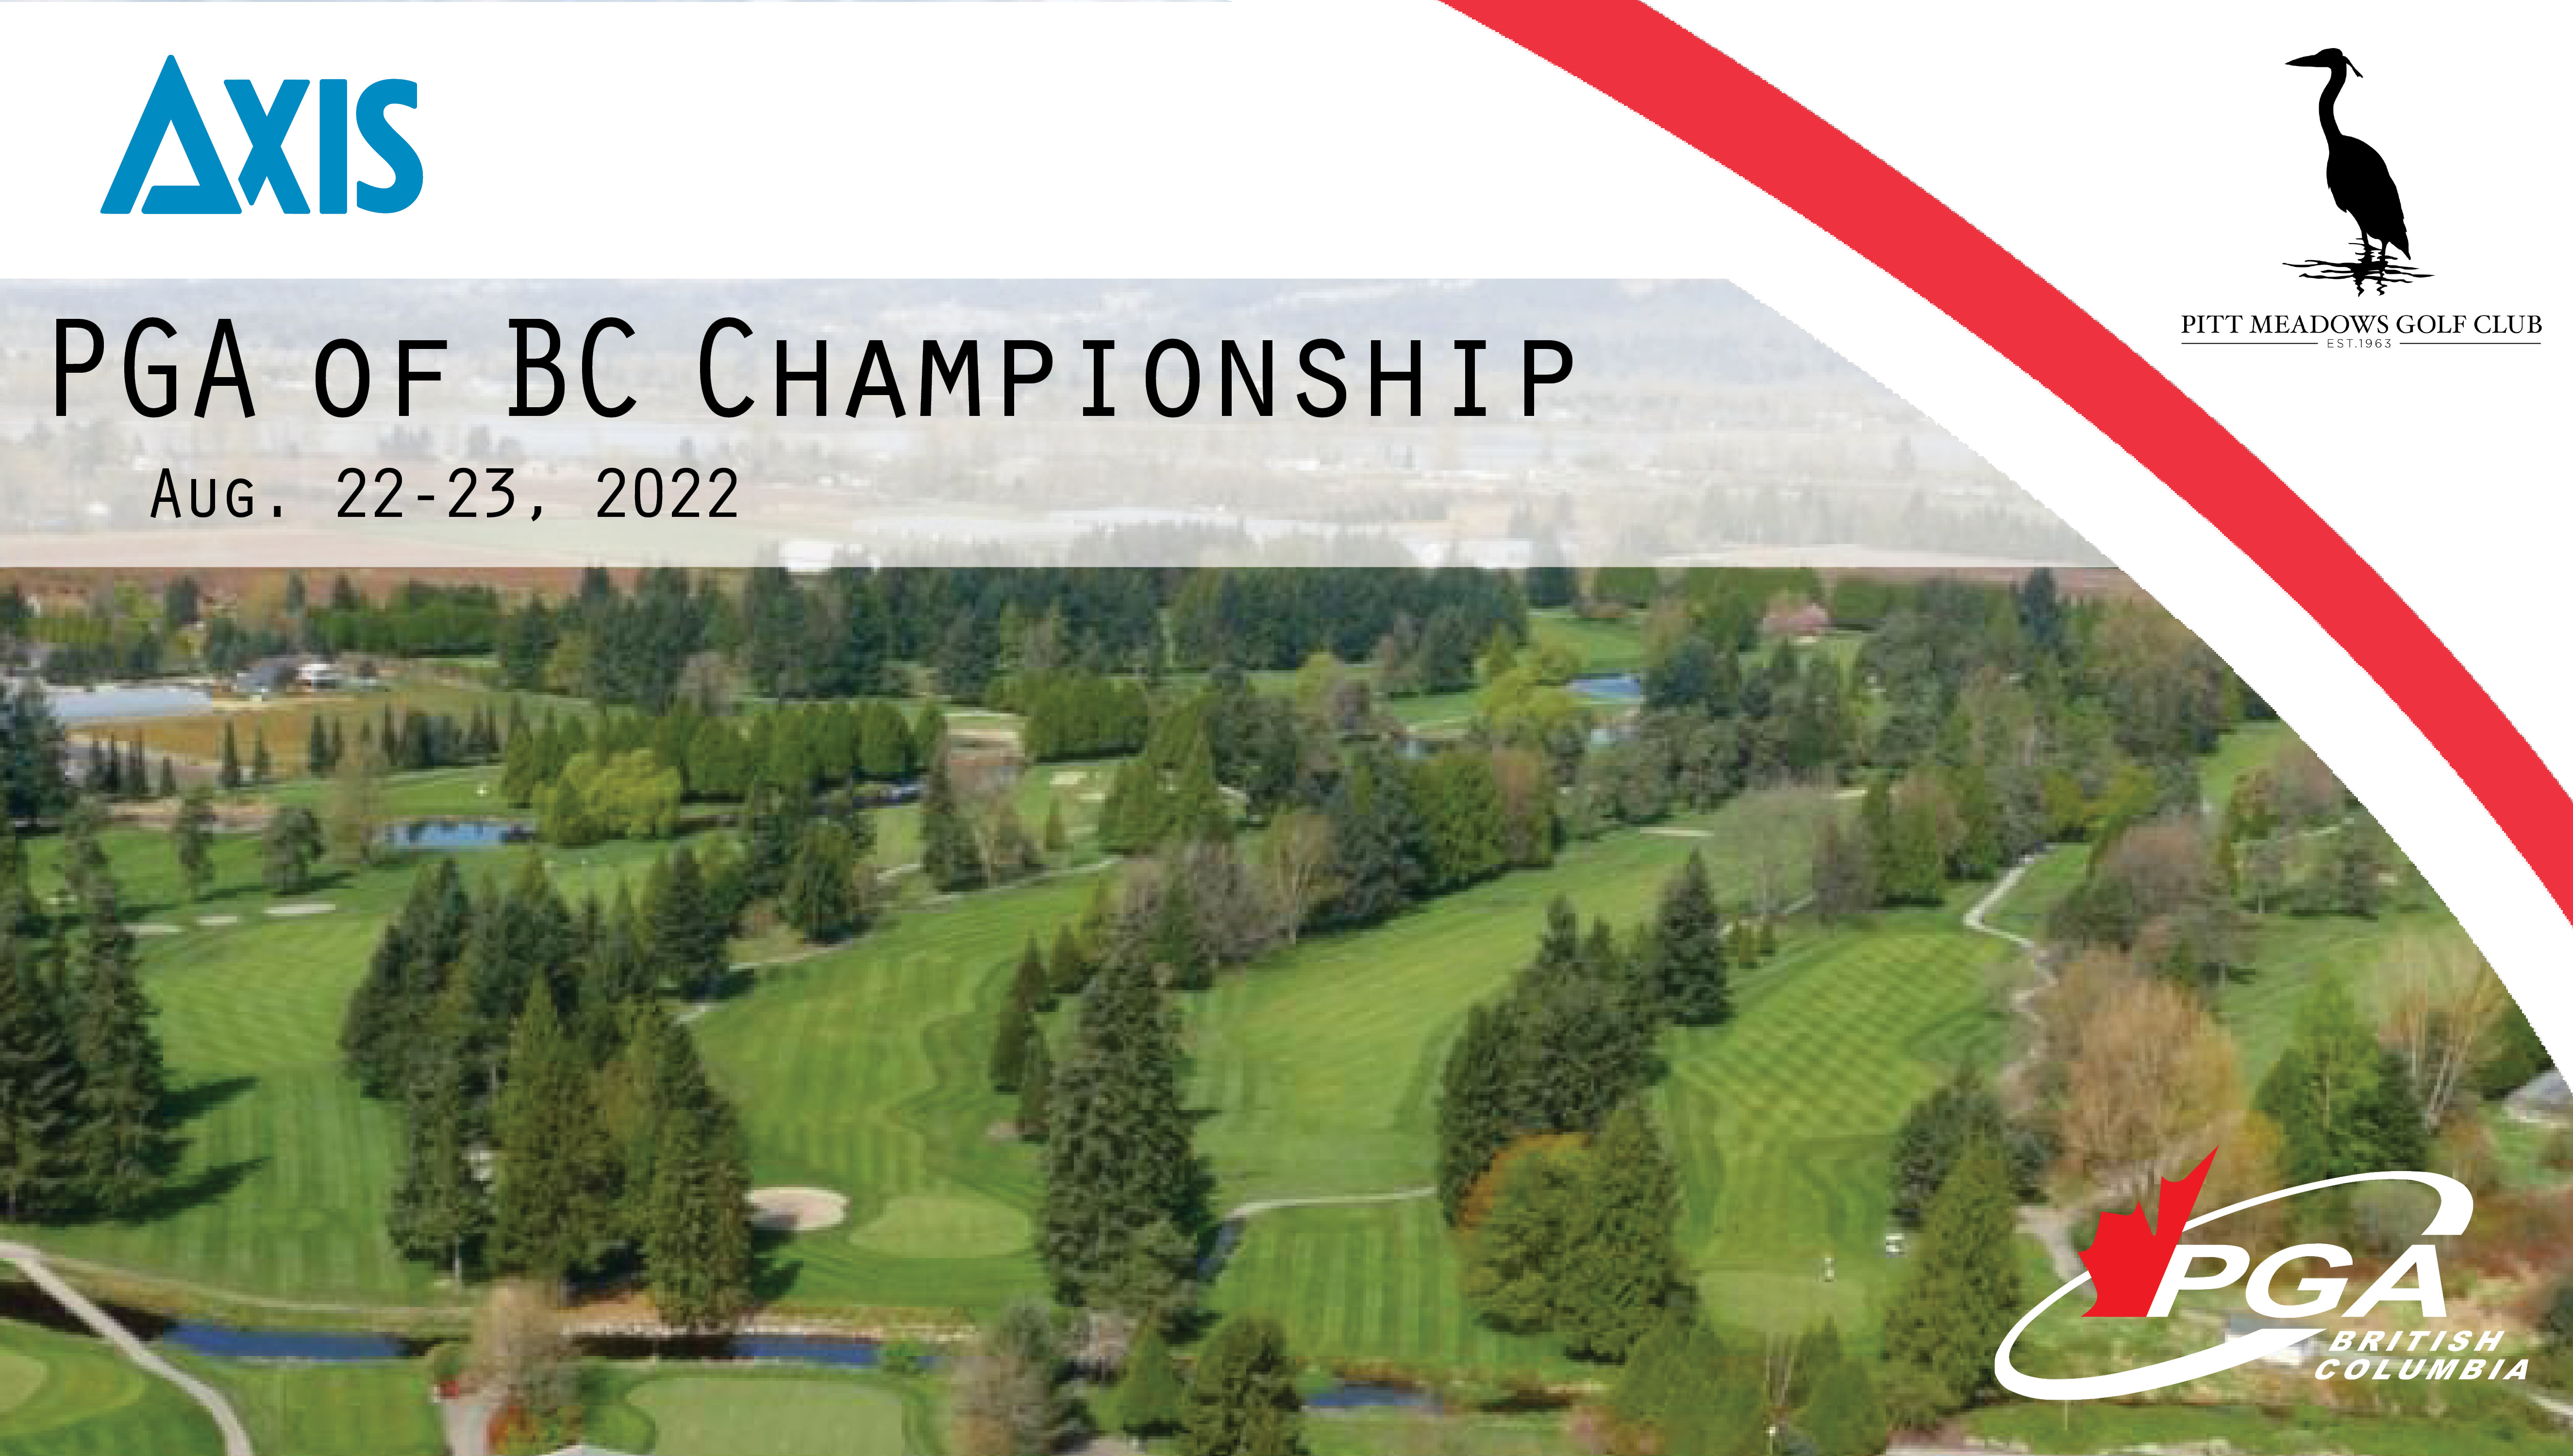 Pitt Meadows Golf Club set to host PGA of BC Championship PGA of British Columbia image